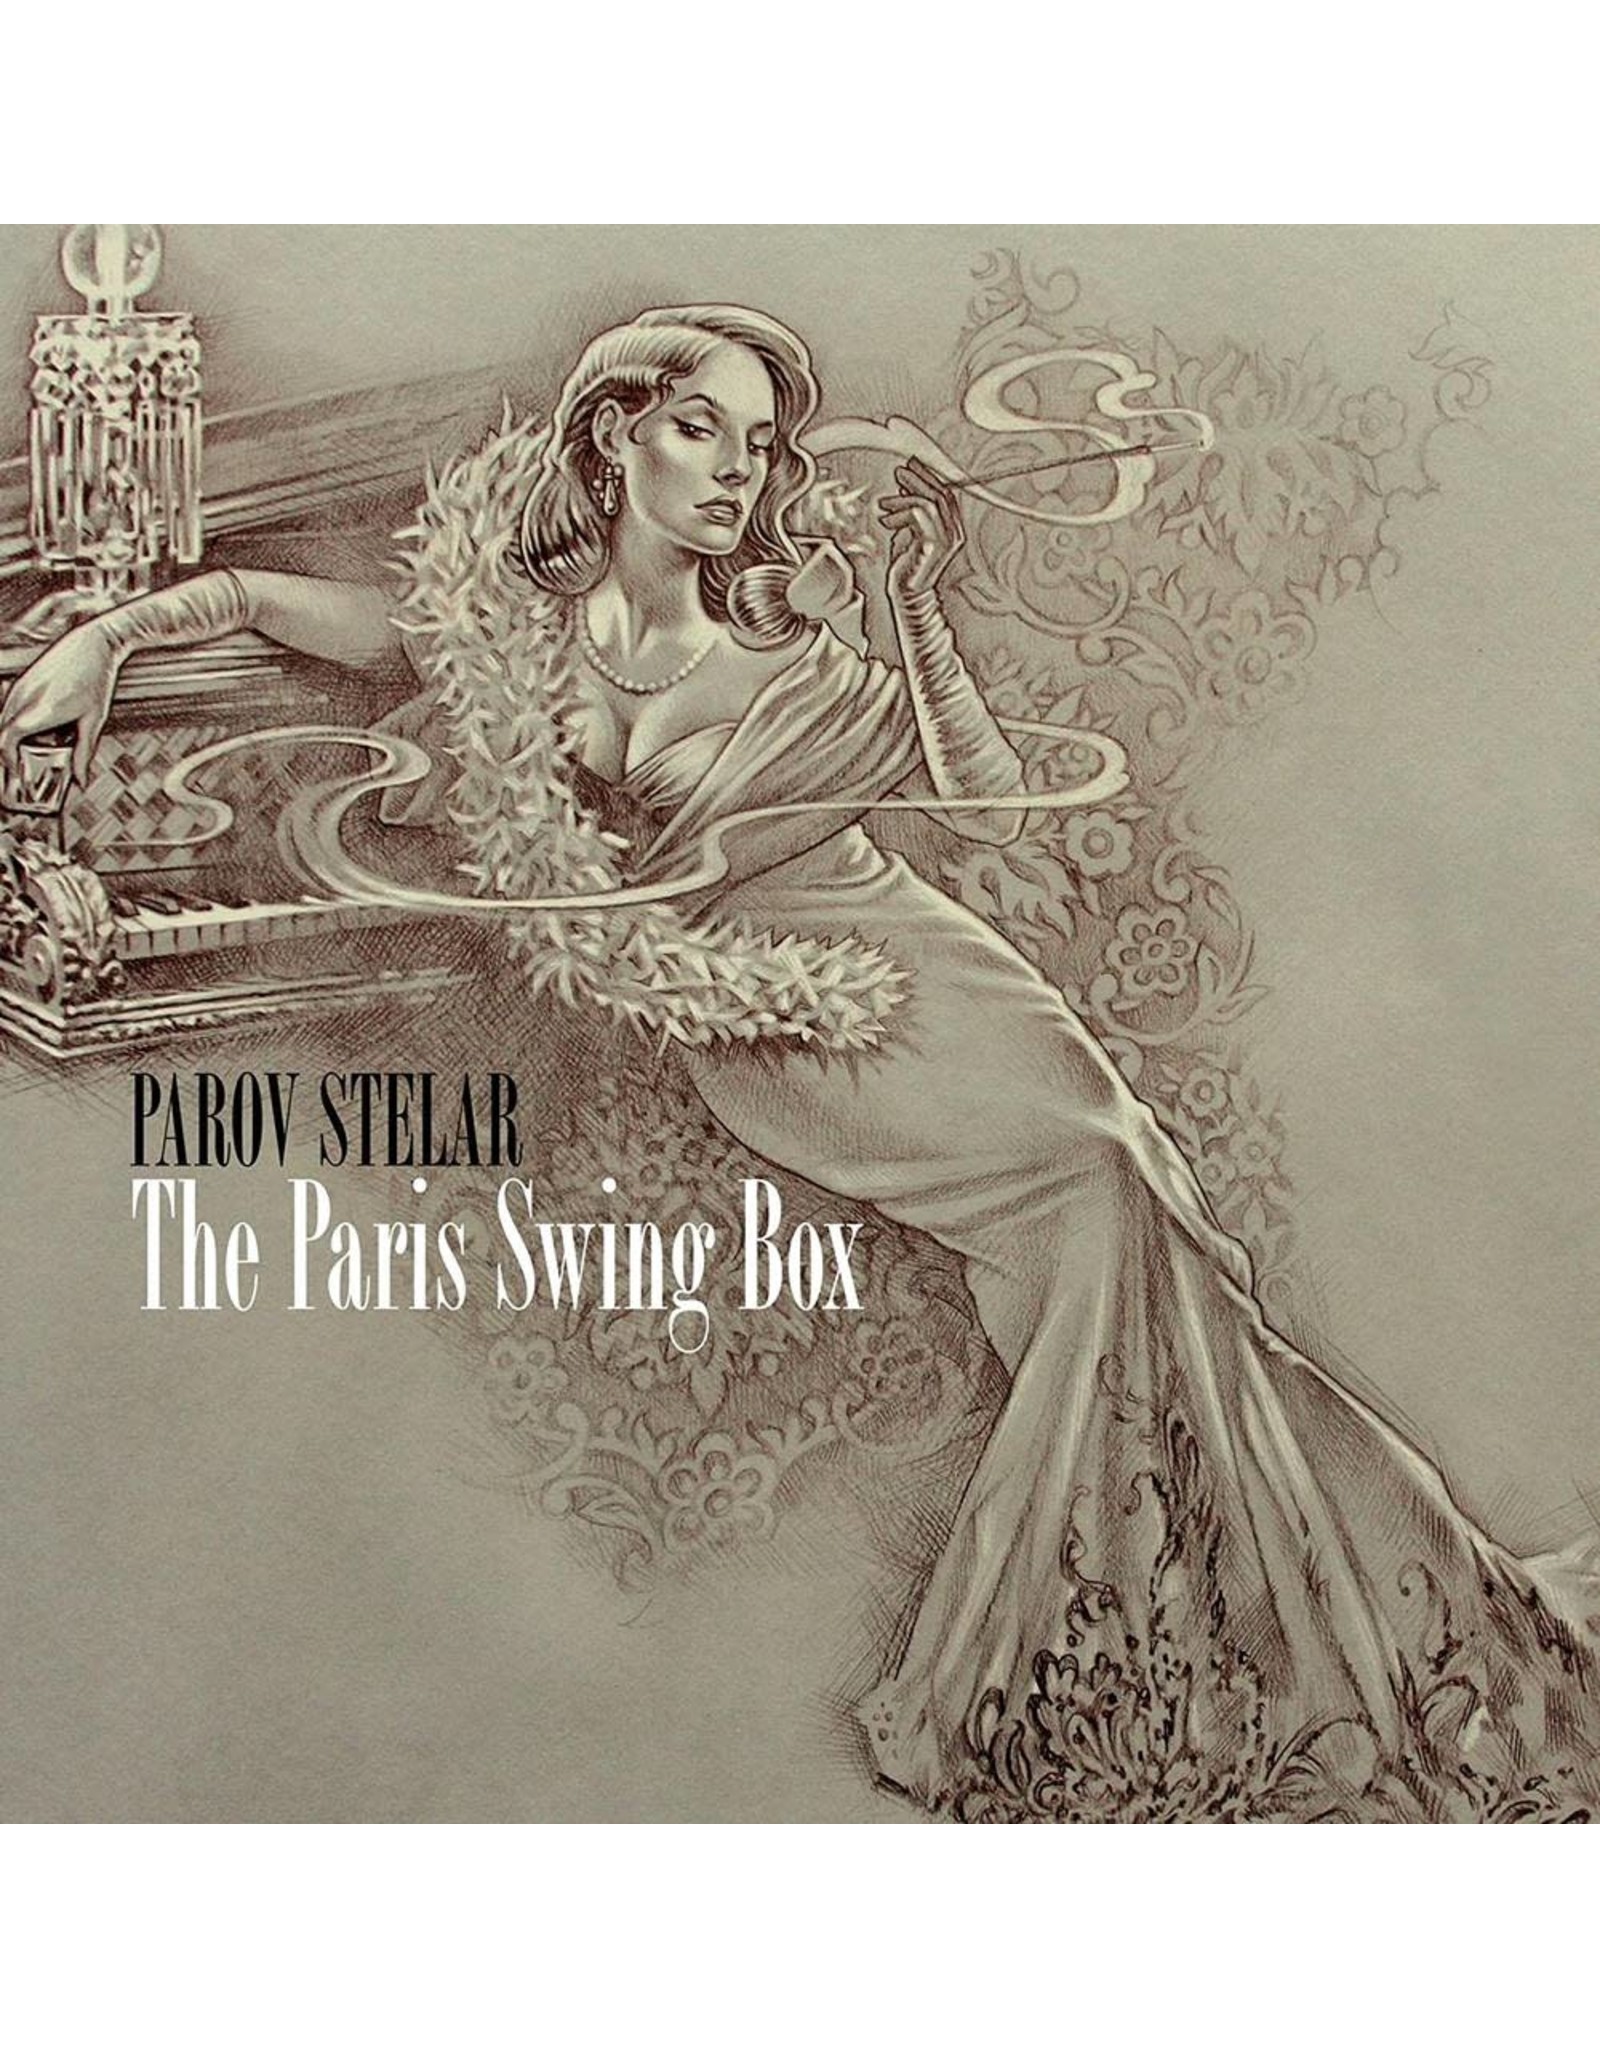 New Vinyl Parov Stelar - The Paris Swing Box (Ltd., White) 2LP